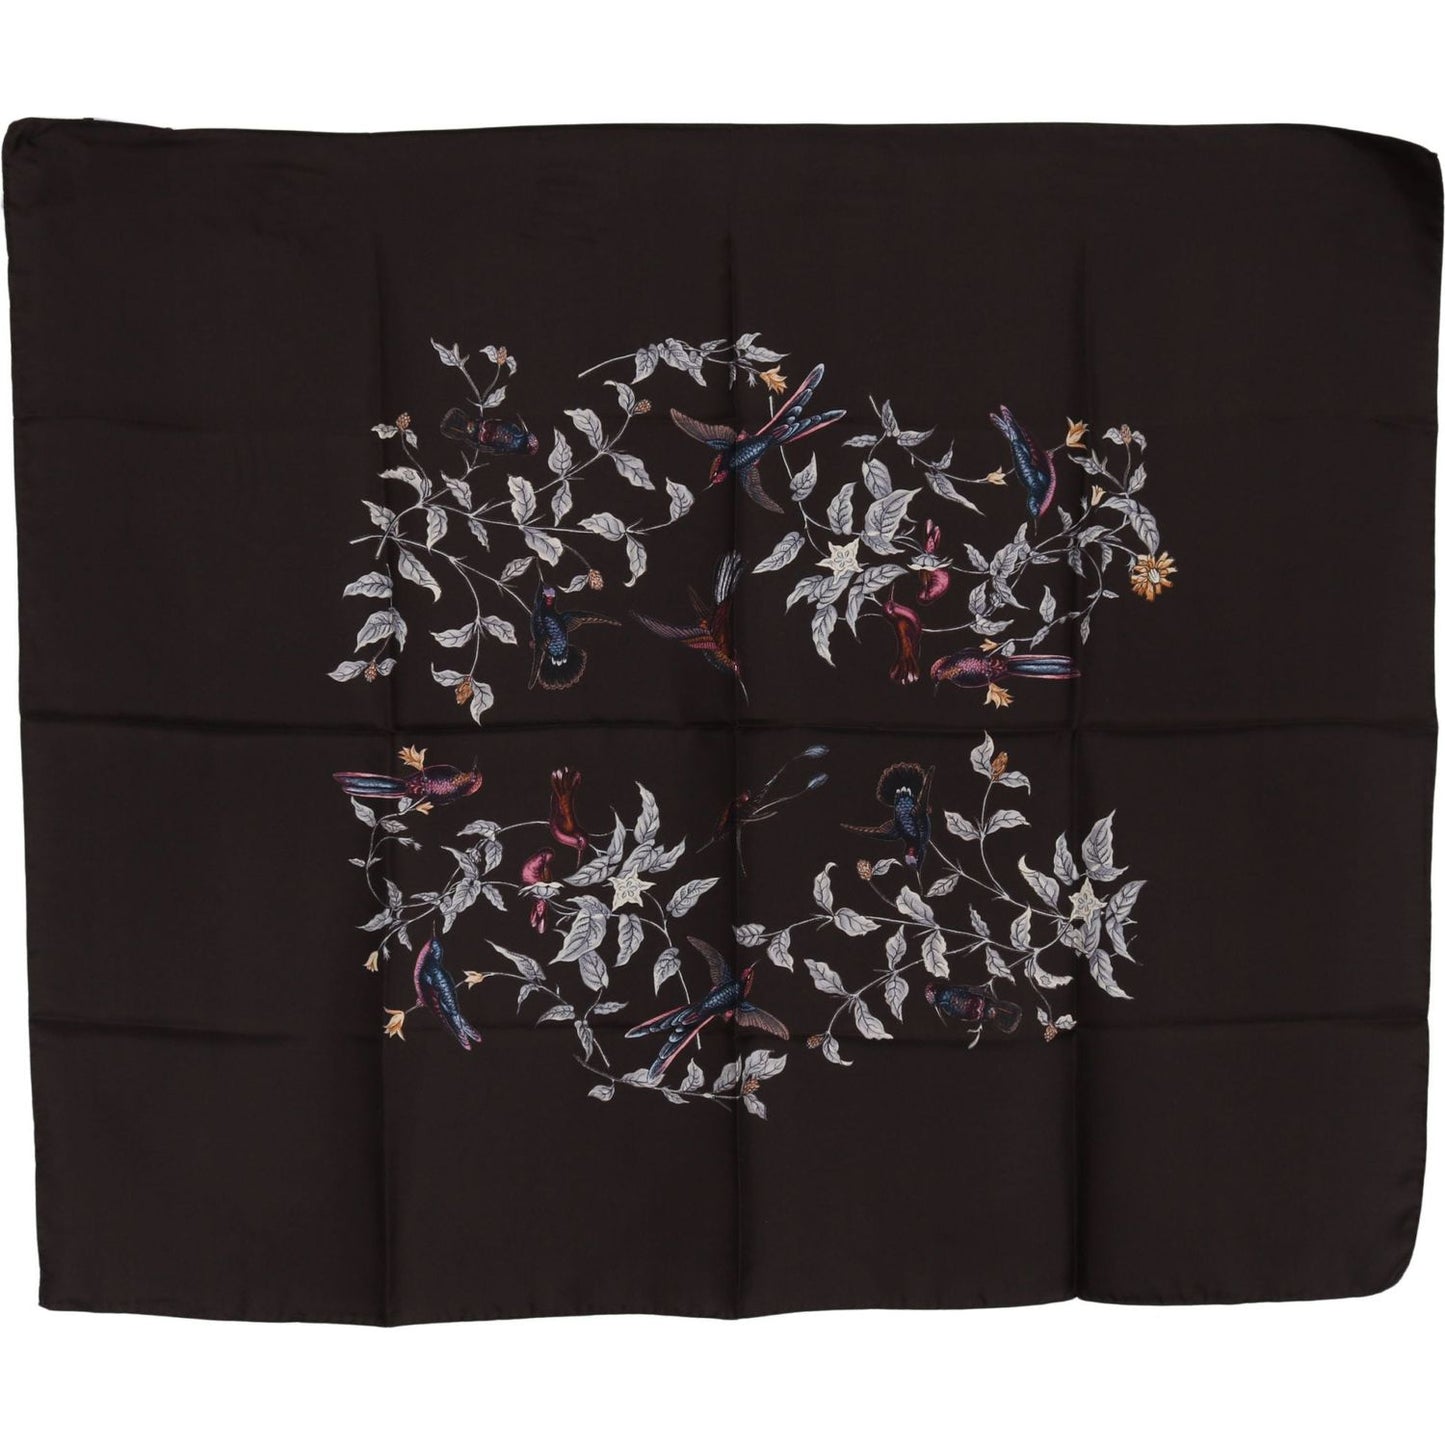 Dolce & Gabbana Elegant Silk Scarf Wrap in Luxe Brown brown-100-silk-bird-print-wrap-80cm-x-95cm-rrp-scarf Silk Wrap Shawls IMG_3730-scaled-372044dc-e94.jpg